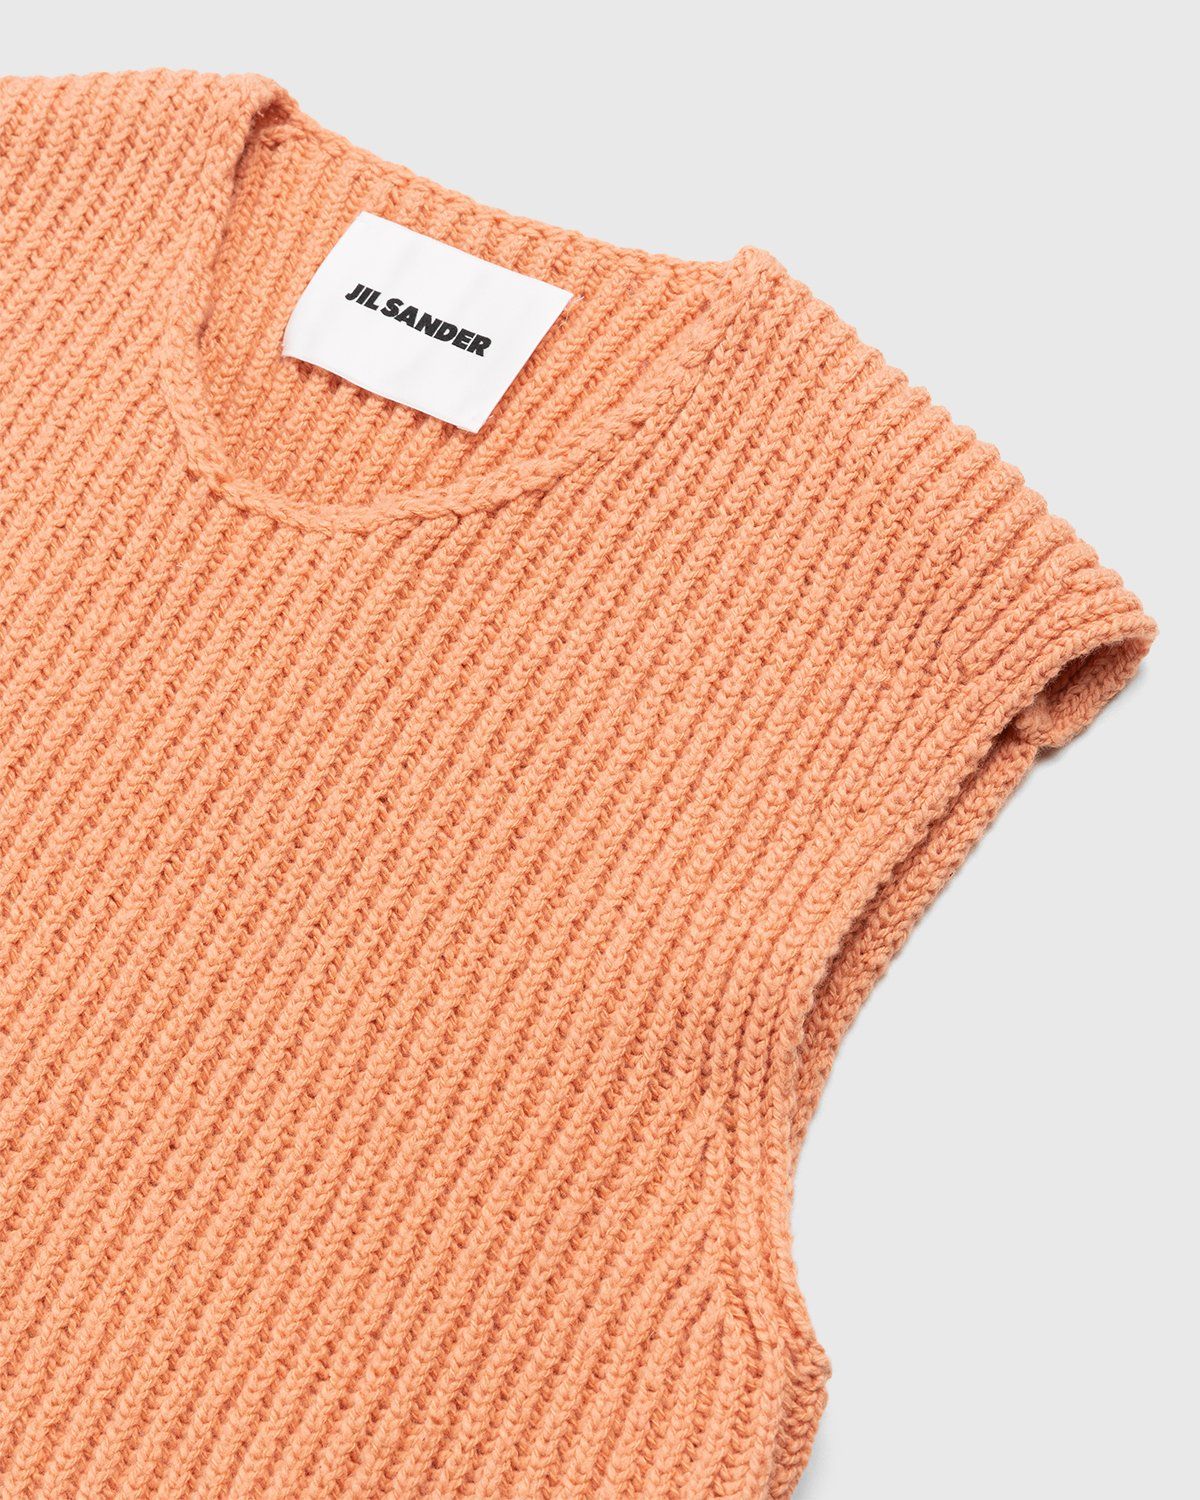 Jil Sander – Rib Knit Vest Orange - Knitwear - Orange - Image 3